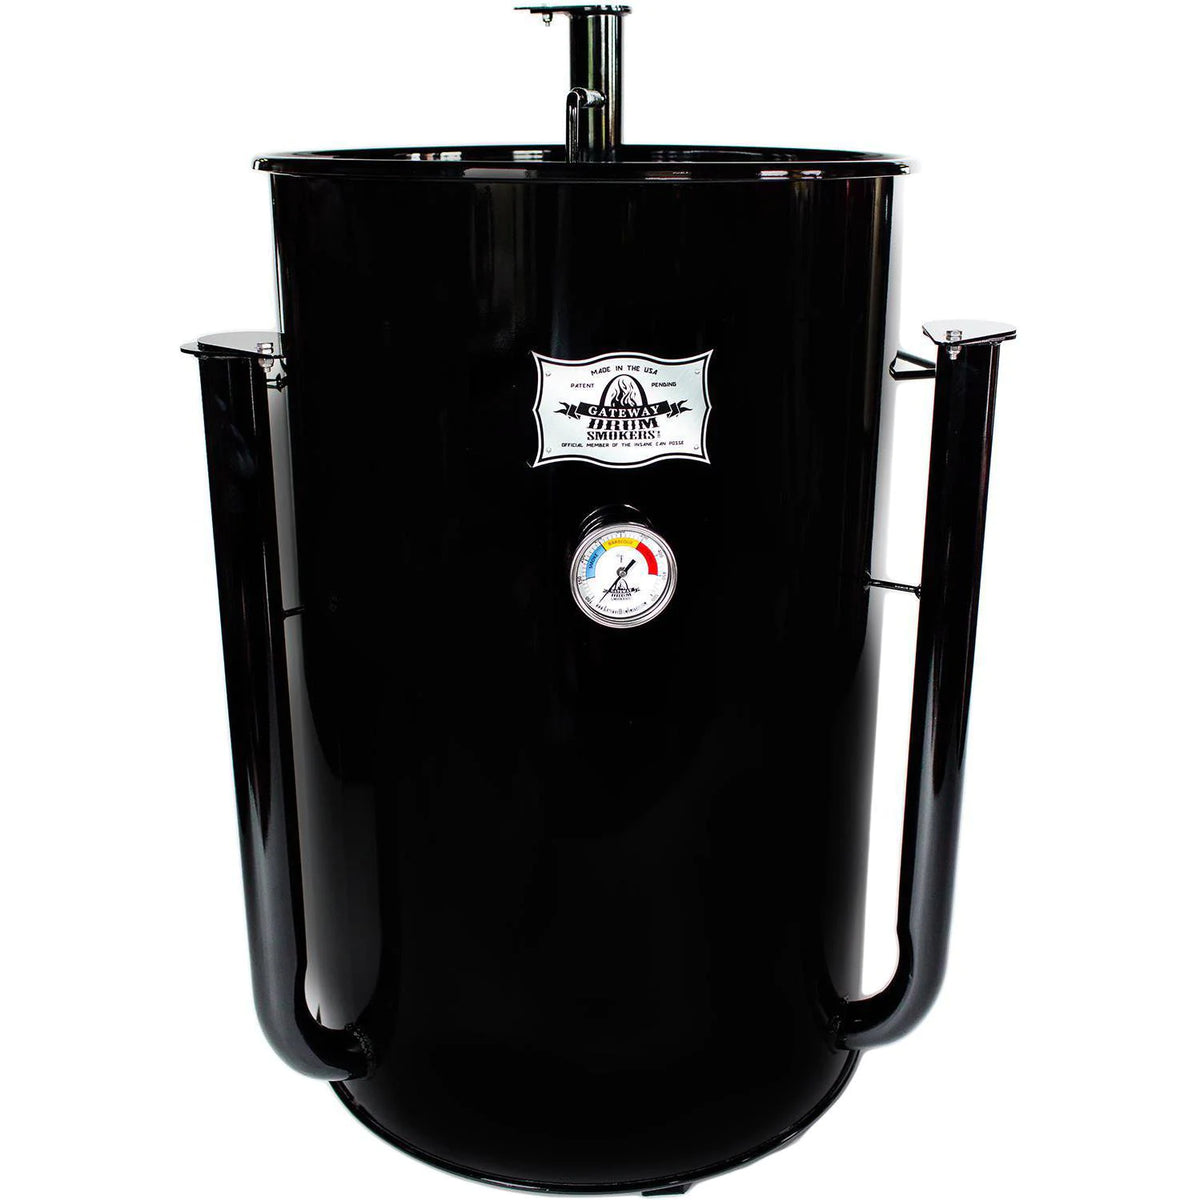 Gateway Drum Smokers 55111 55 Gallon Charcoal BBQ Smoker - Black